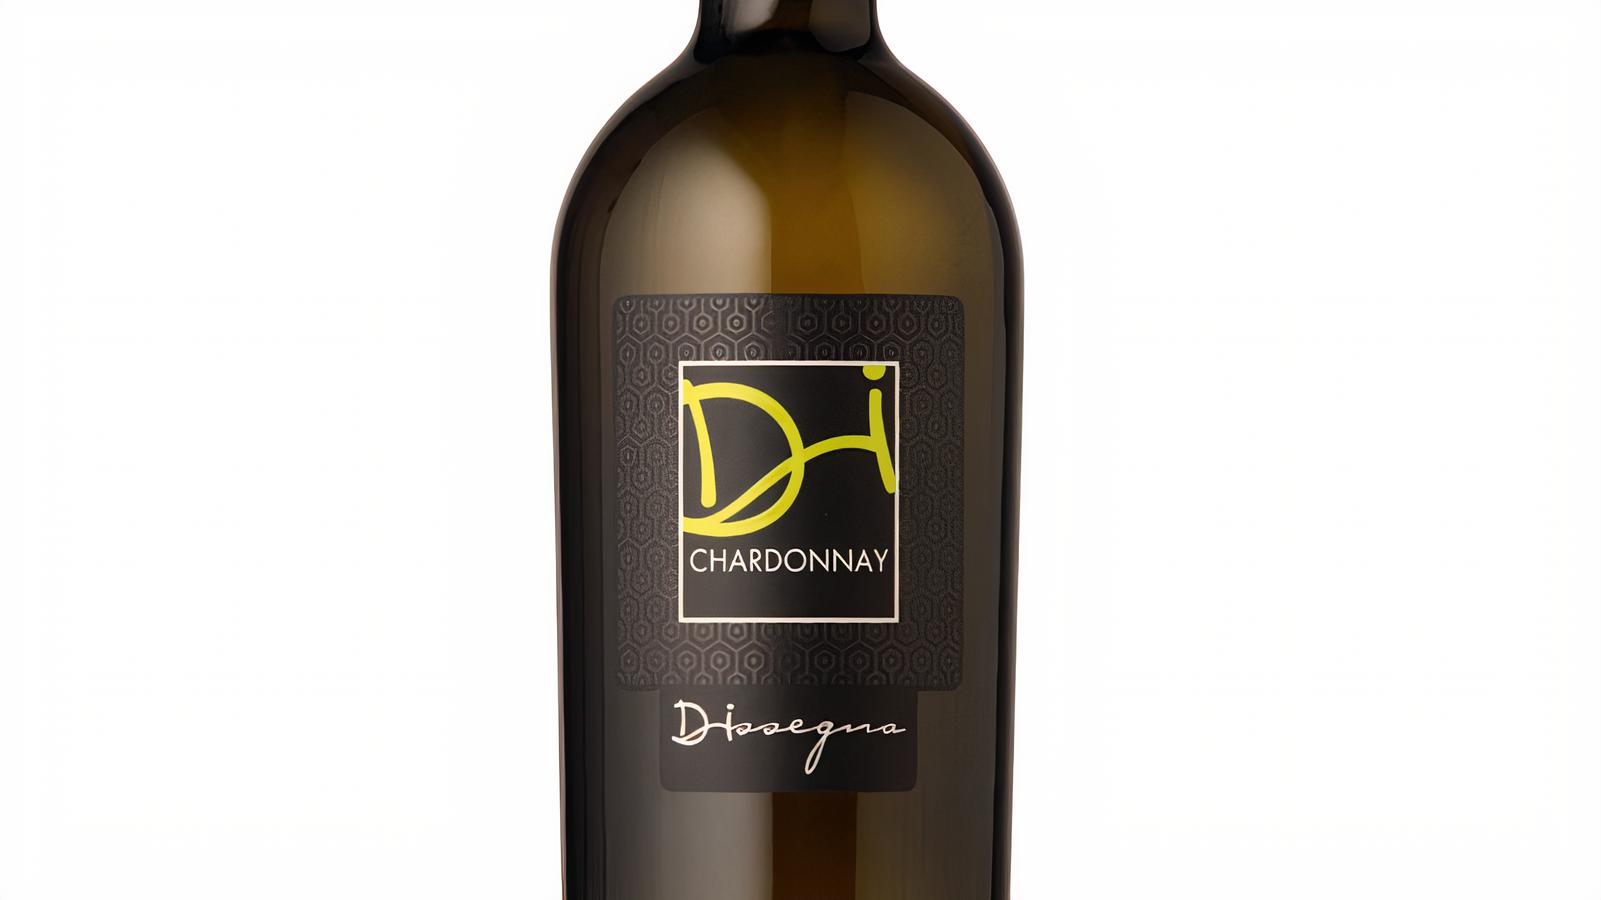 Chardonnay Dissegna, 750mL wine (13% ABV)